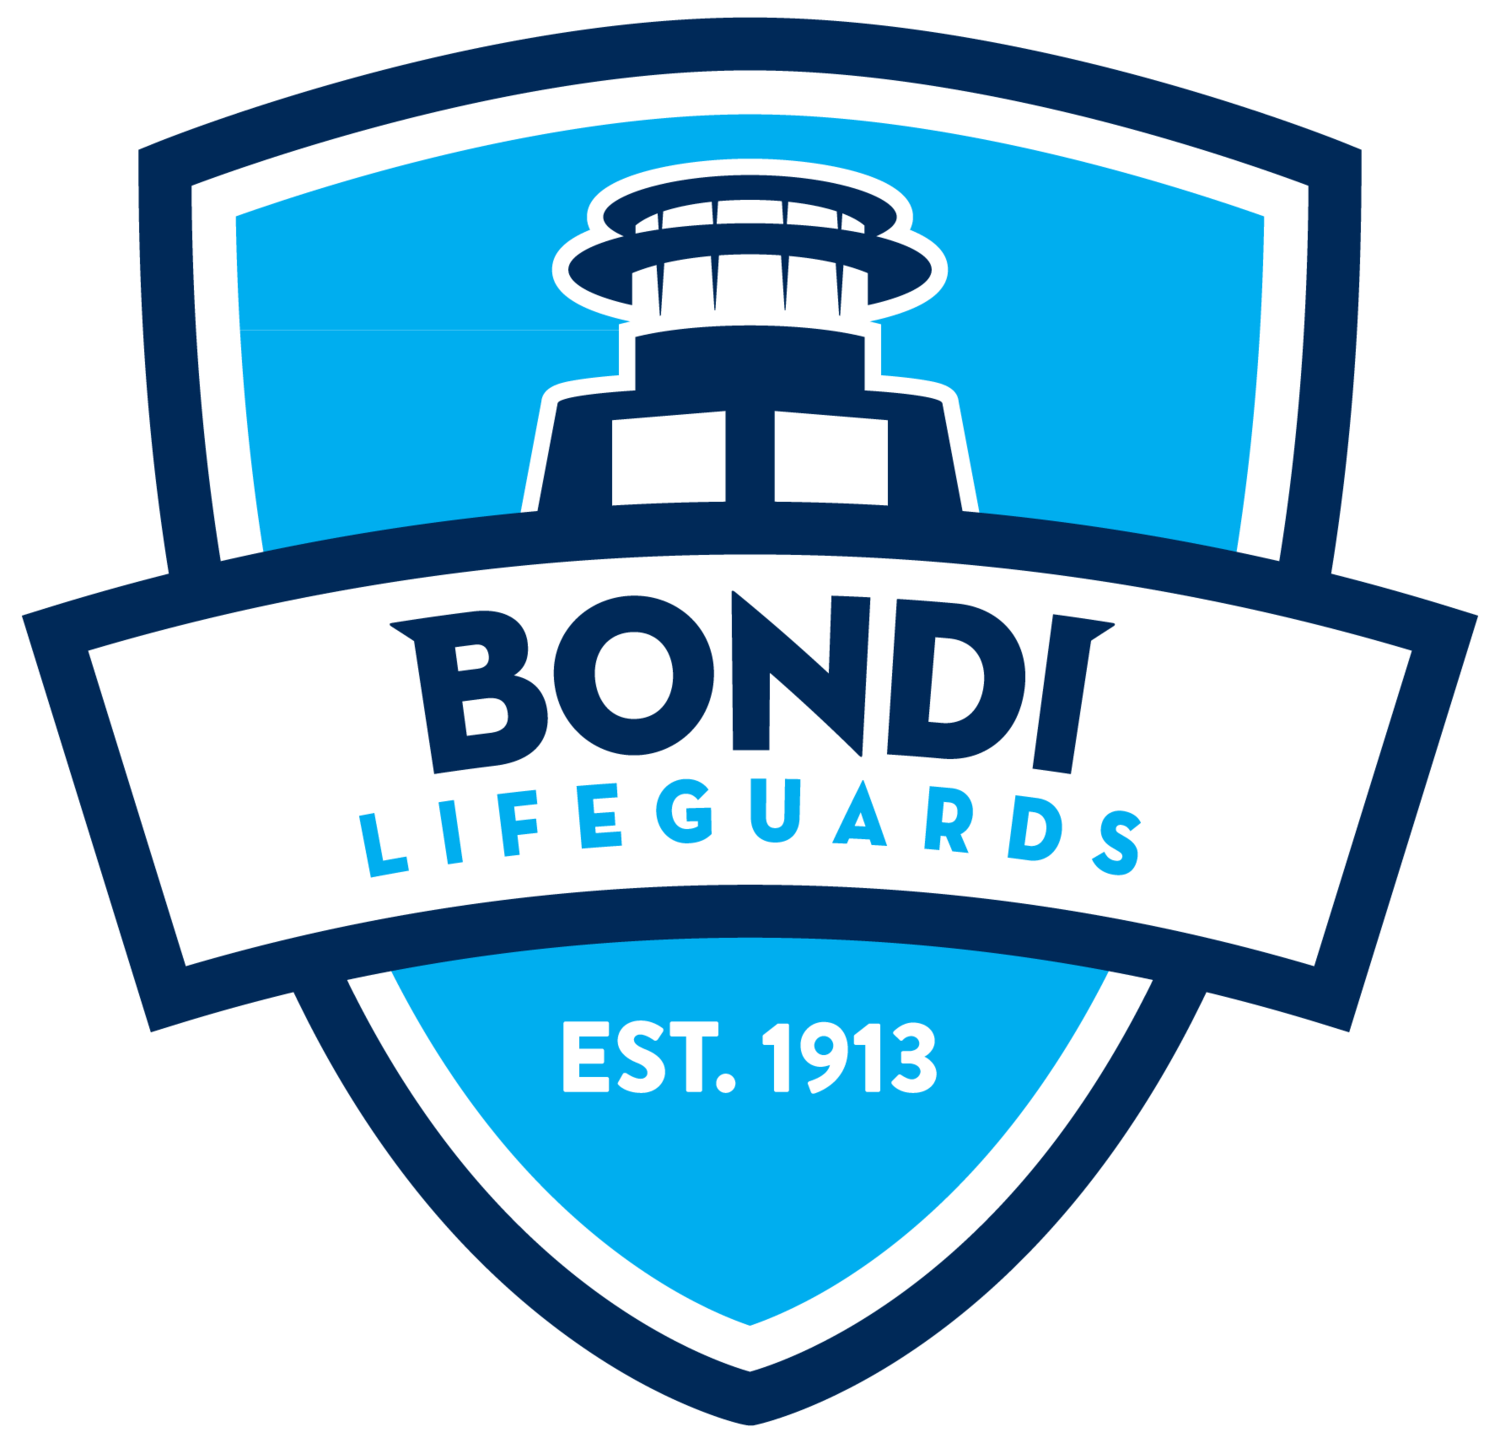 Bondi lifeguards . Lifeguard clipart female lifeguard